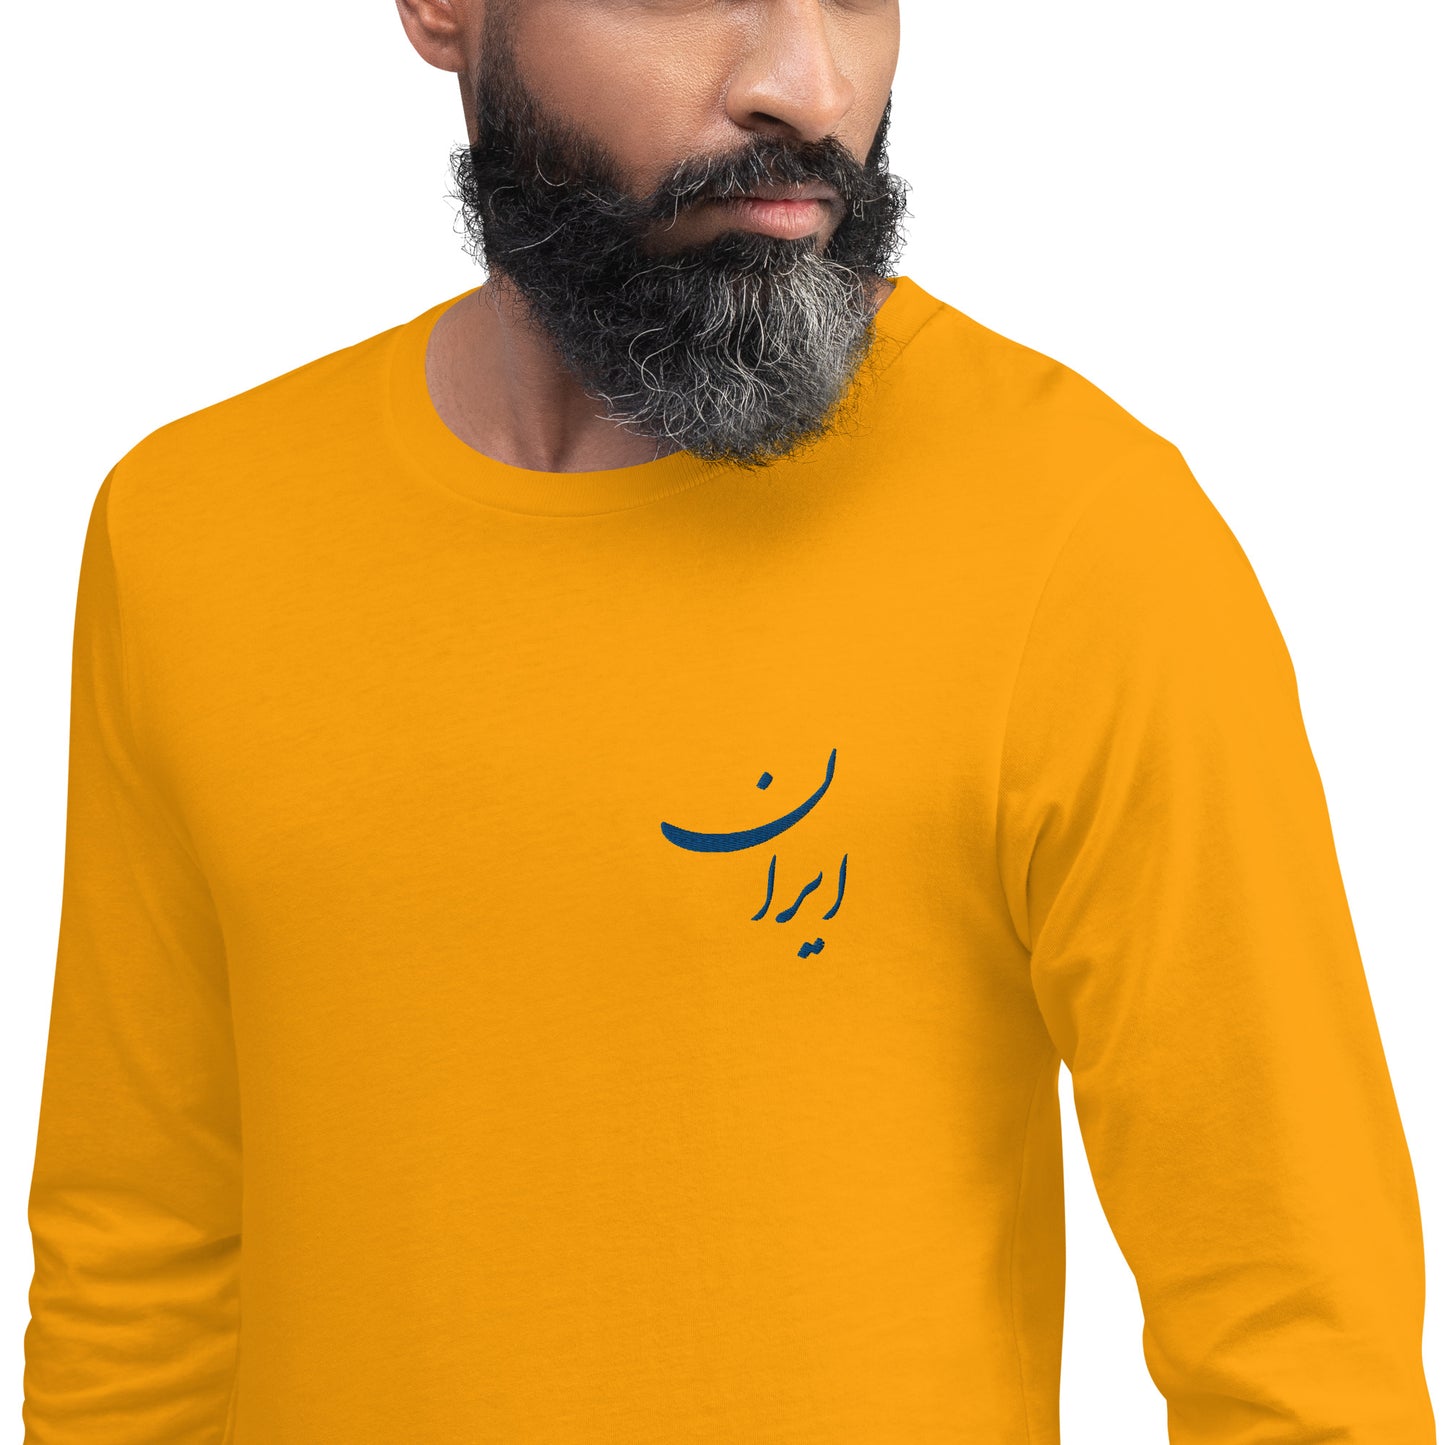 Men's Cotton Long Sleeve Tee Dark Embroidery Iran /پیراهن نخی آستین‌بلند مردانه با نخ‌نوشت تیره ایران